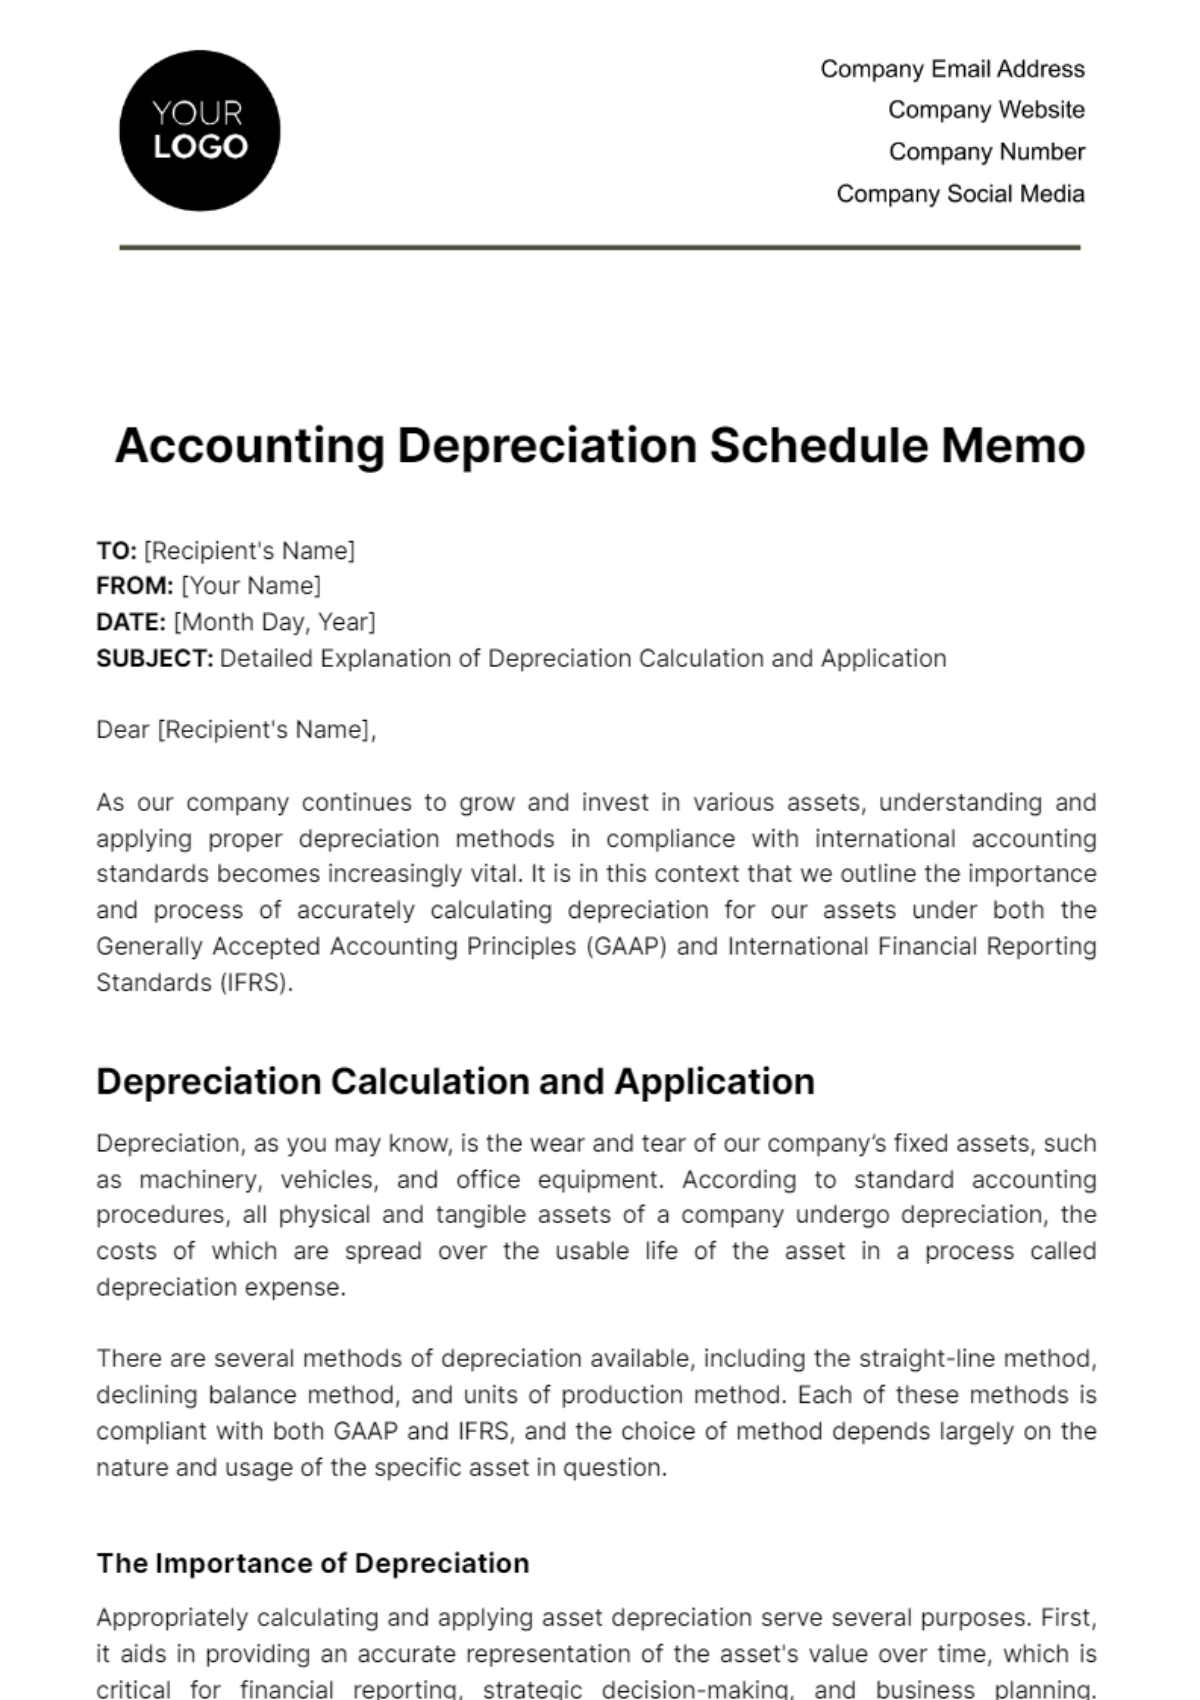 Free Accounting Depreciation Schedule Memo Template